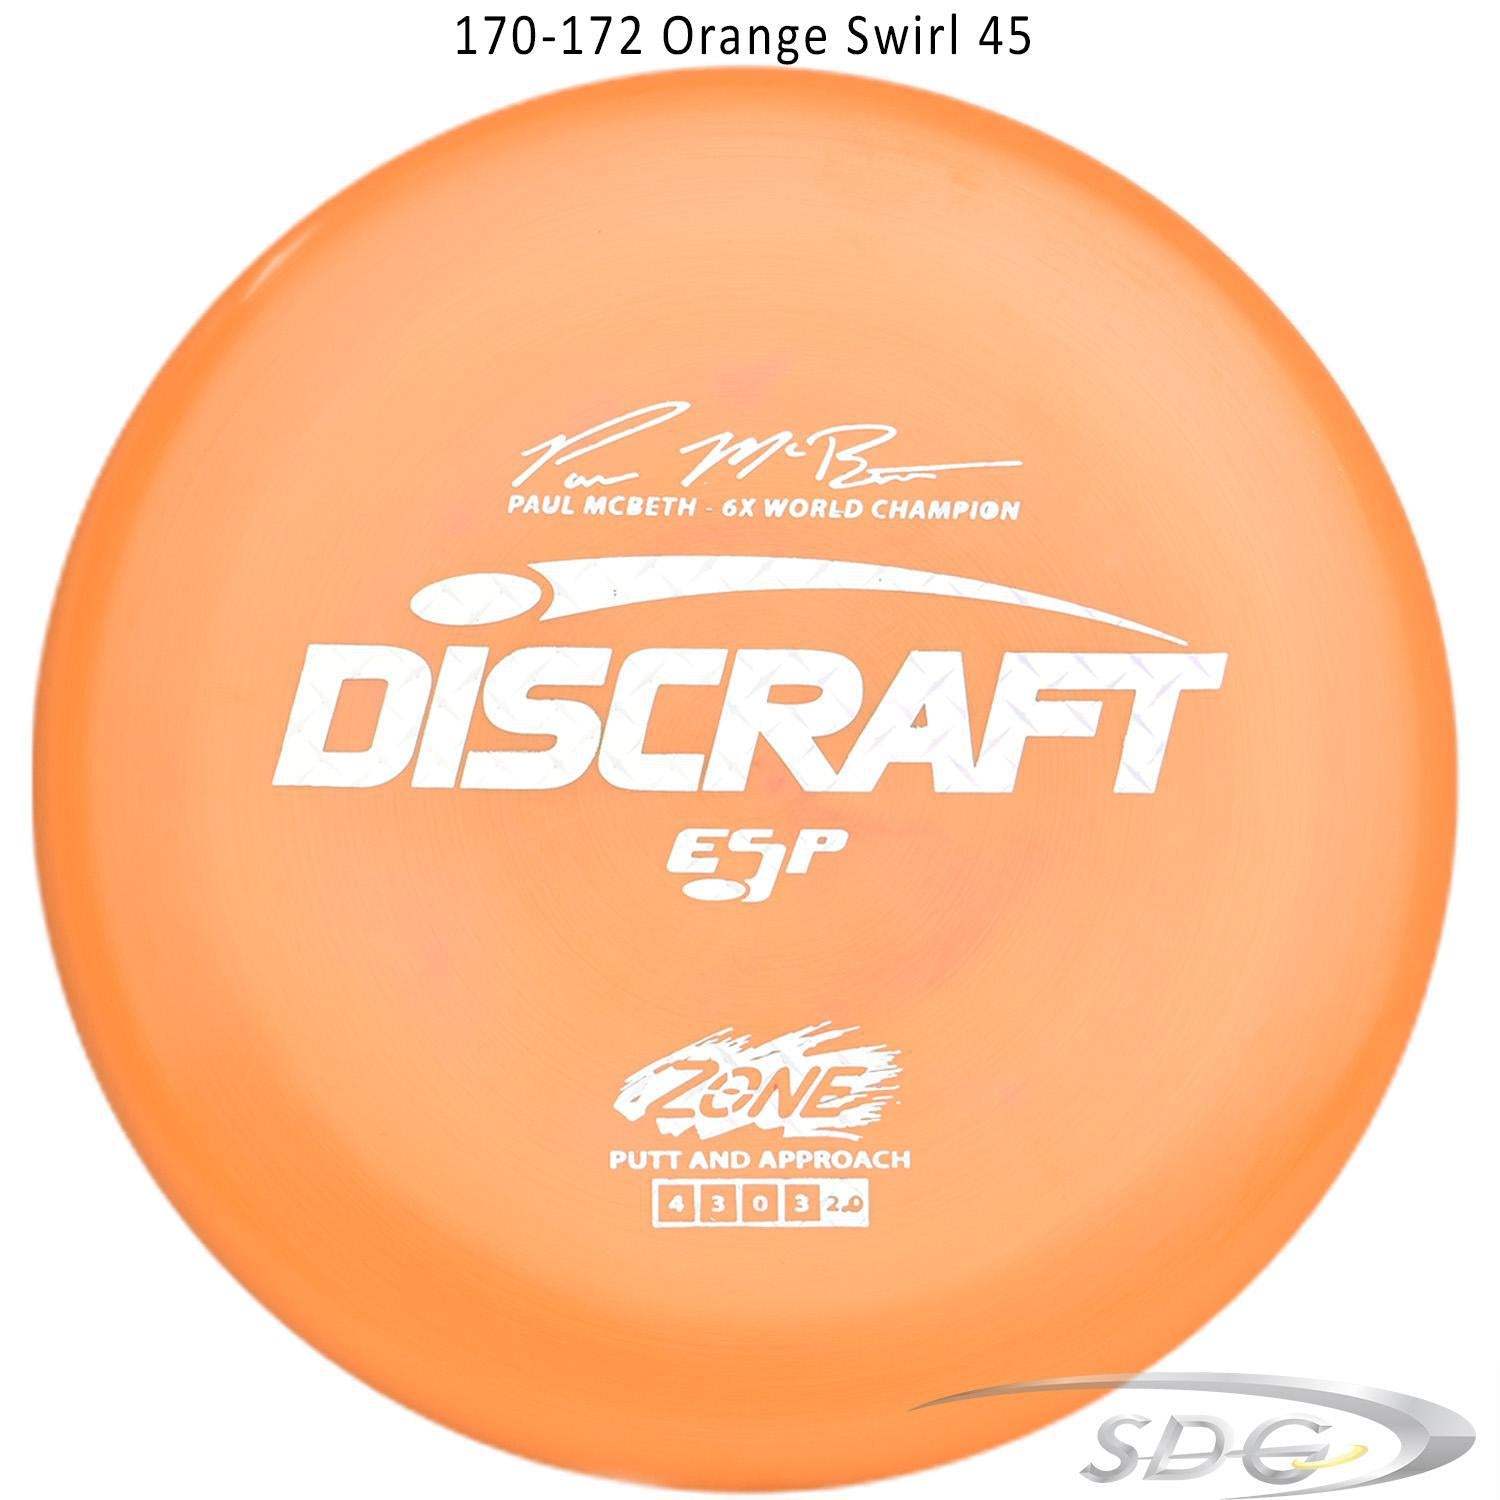 discraft-esp-zone-6x-paul-mcbeth-signature-series-disc-golf-putter-172-170-weights 170-172 Orange Swirl 45 